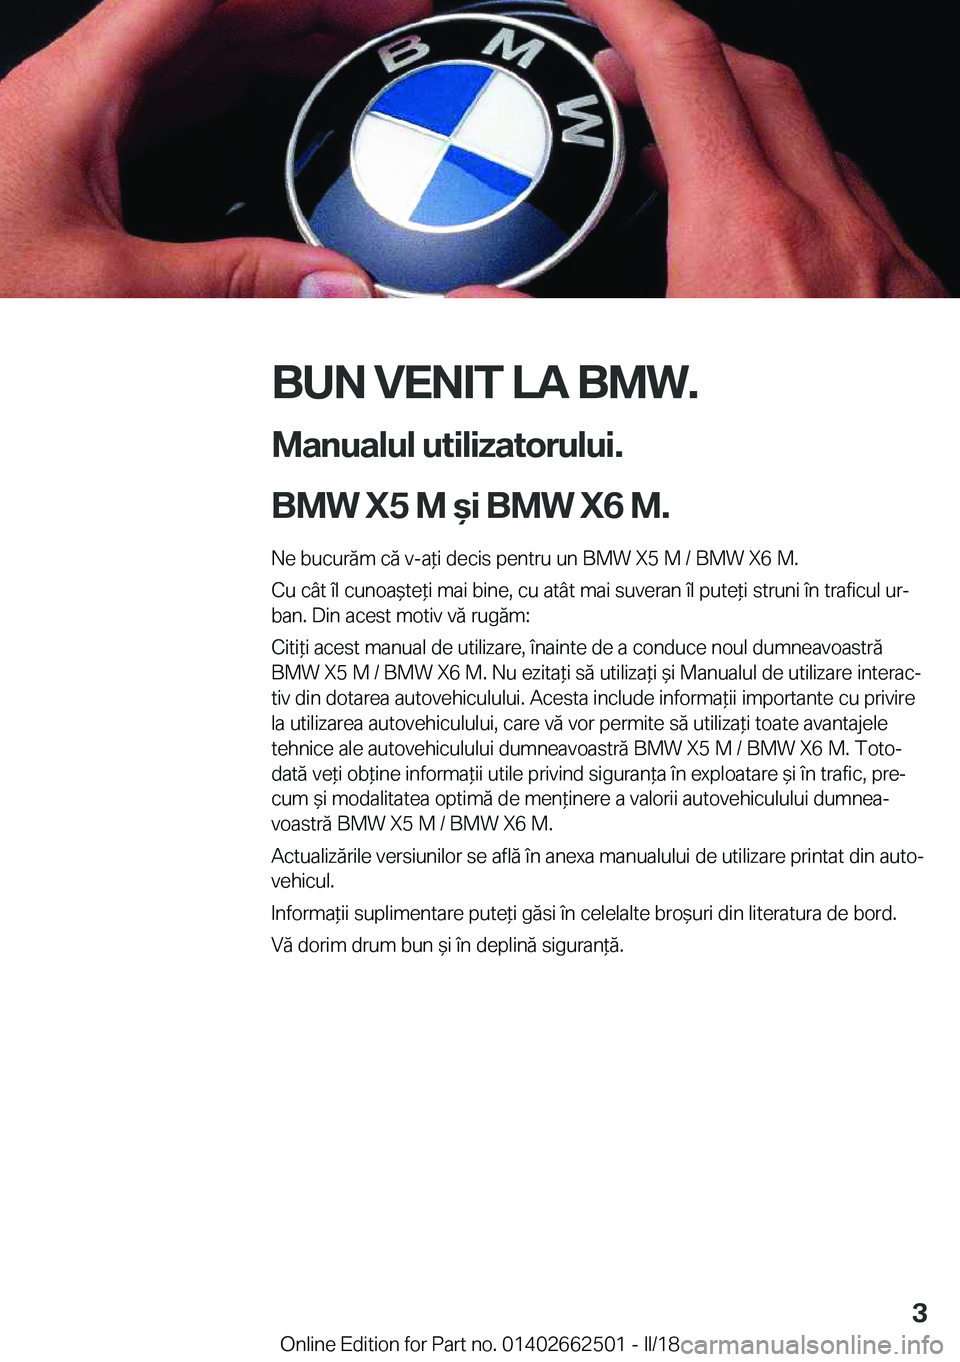 BMW X5 M 2018  Ghiduri De Utilizare (in Romanian) �B�U�N��V�E�N�I�T��L�A��B�M�W�.�M�a�n�u�a�l�u�l��u�t�i�l�i�z�a�t�o�r�u�l�u�i�.
�B�M�W��X�5��M�&�i��B�M�W��X�6��M�.
�N�e� �b�u�c�u�r�